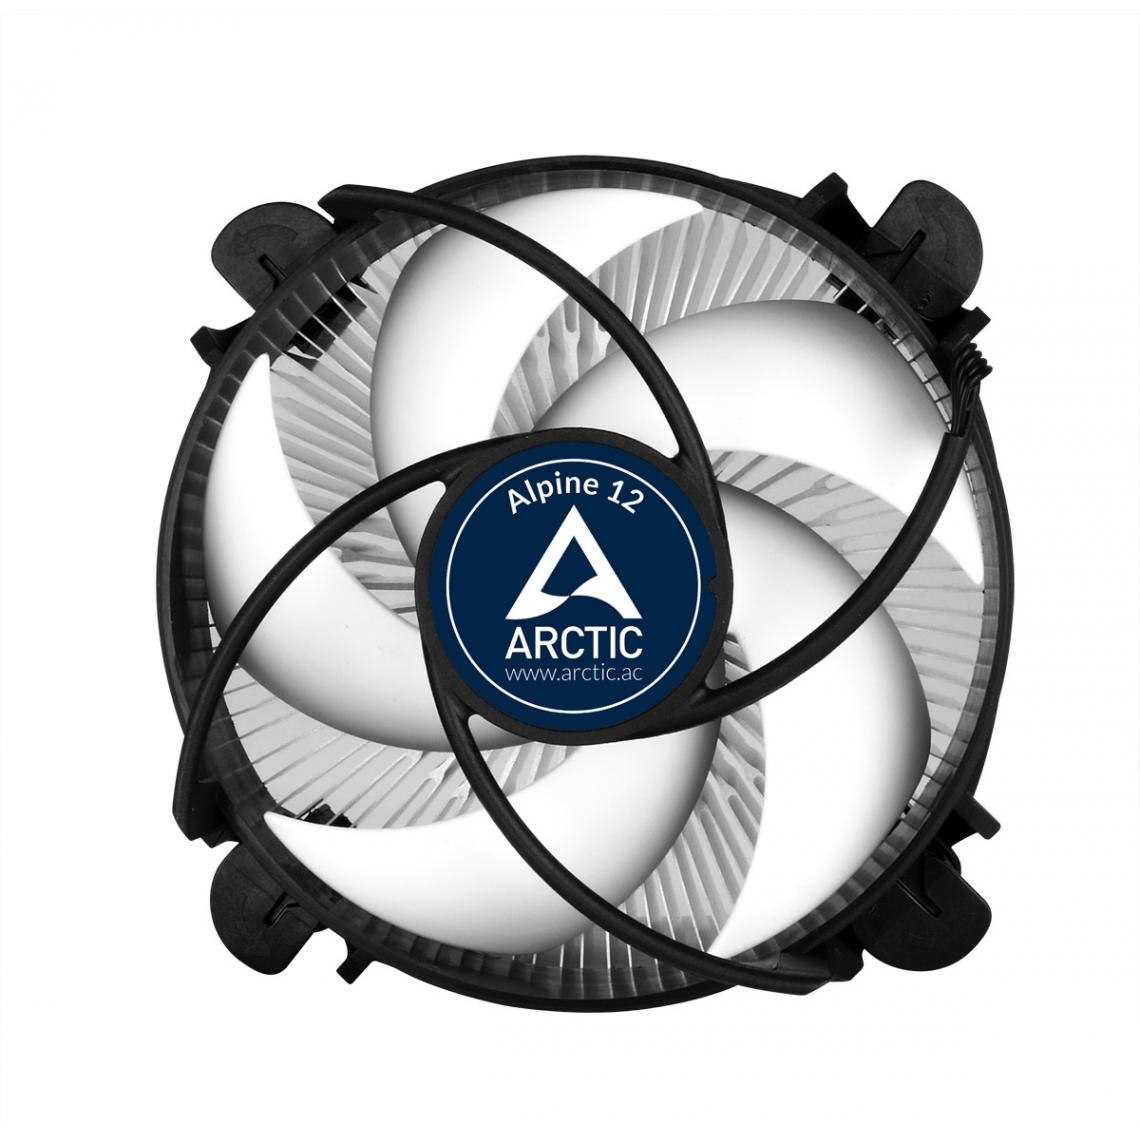 Artic Cooling - Alpine 12 - Ventirad Processeur